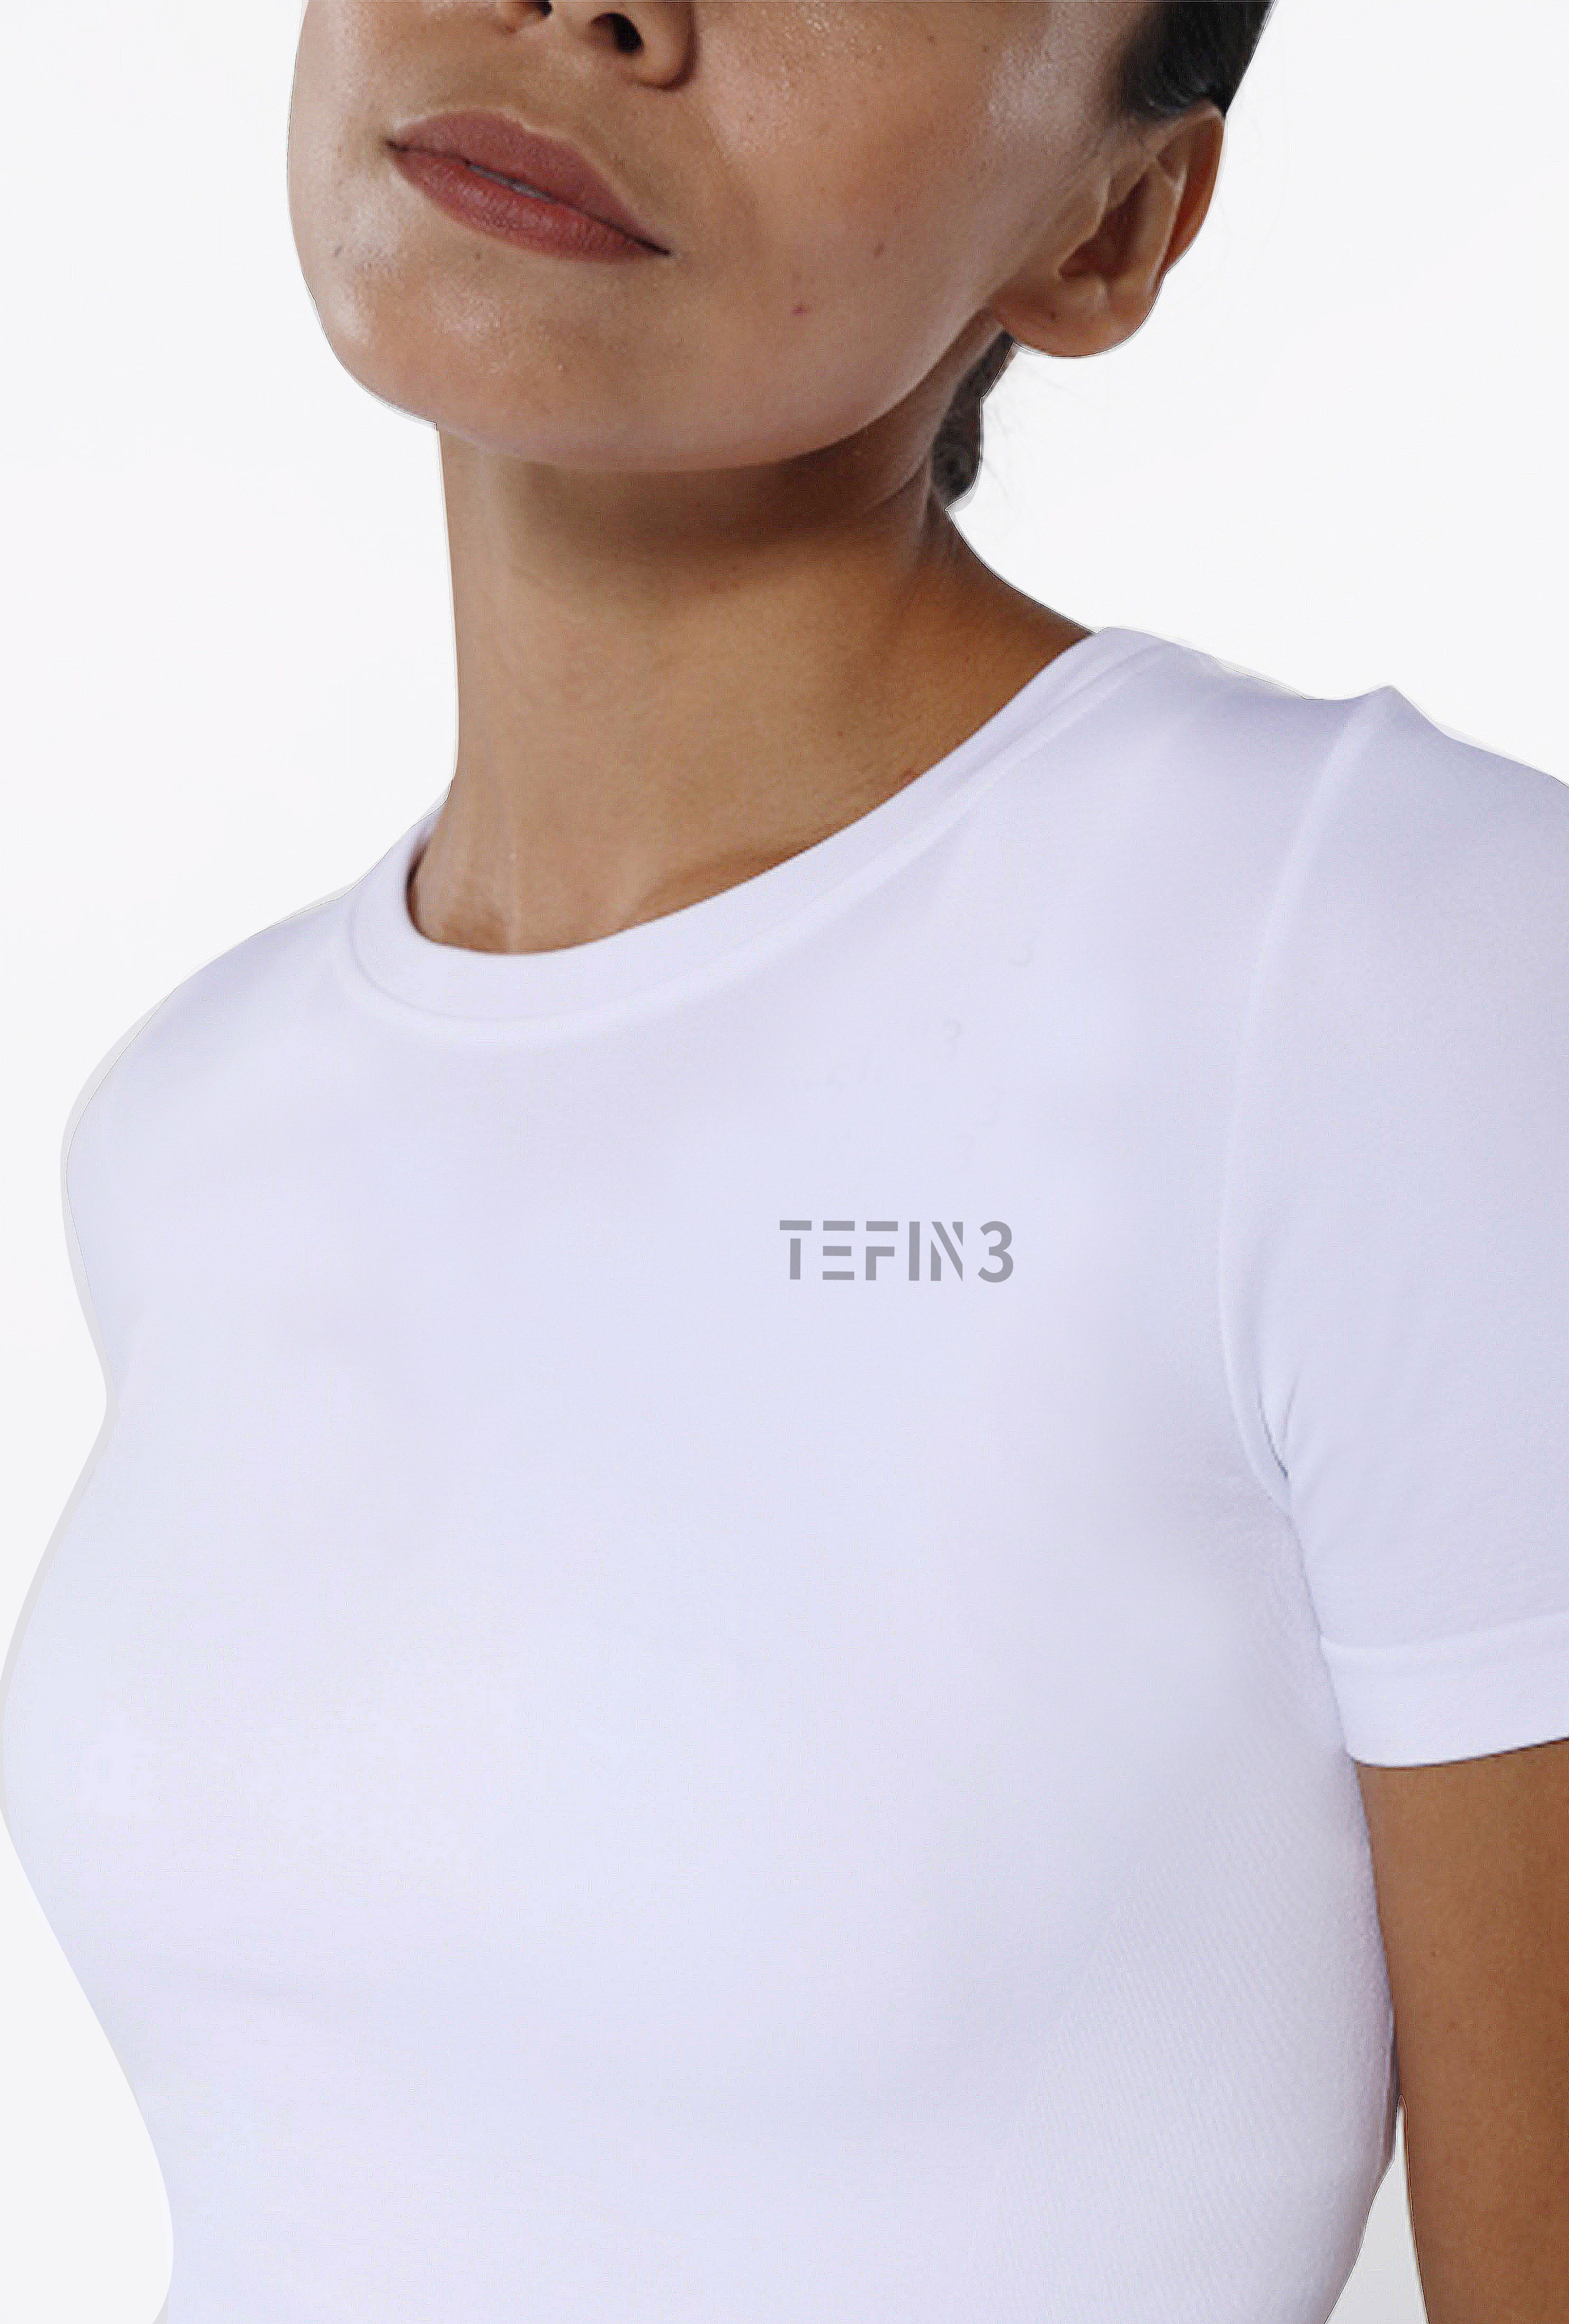 TEFIN3 Comfy Seamless Women T Shirts Short Sleeve White